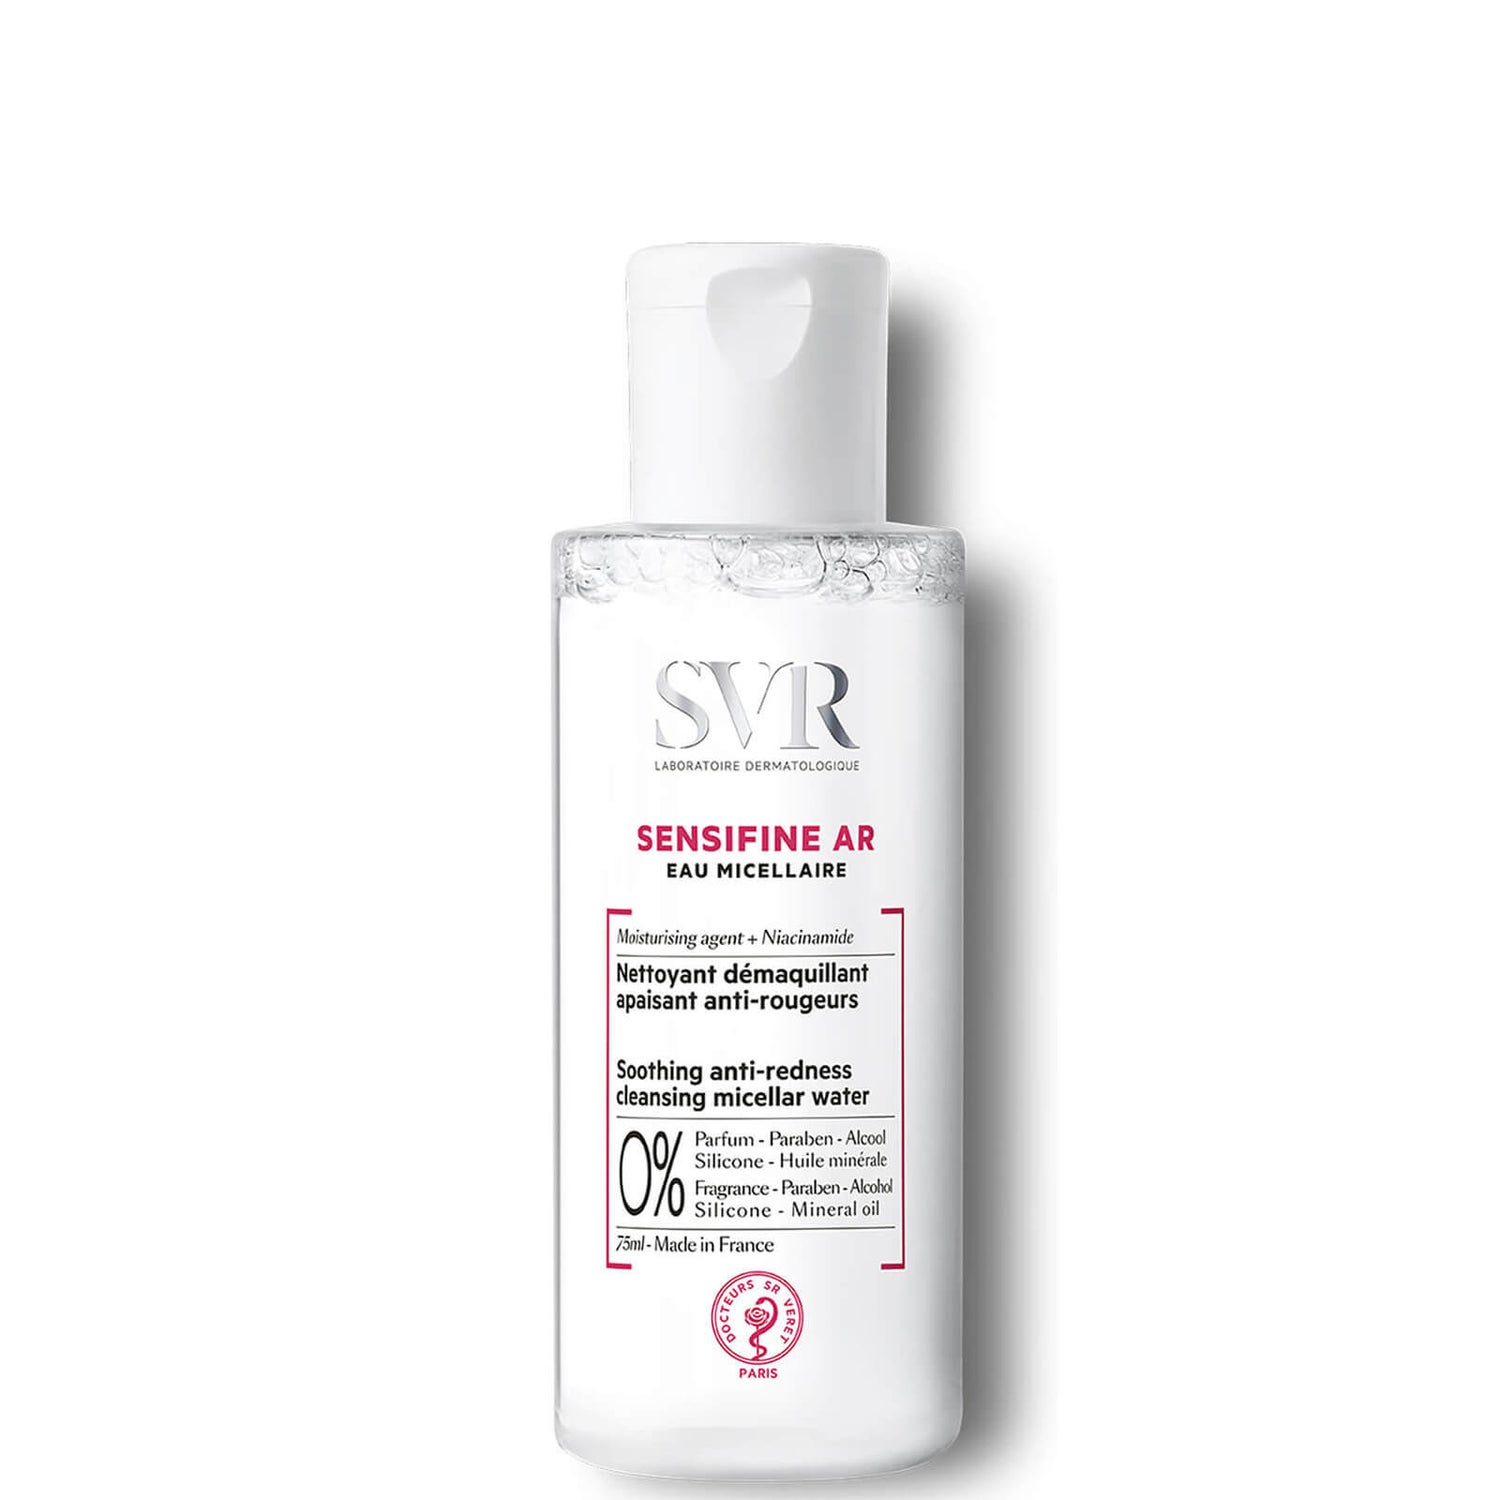 SVR Sensifine AR Micellar Water -75 ml